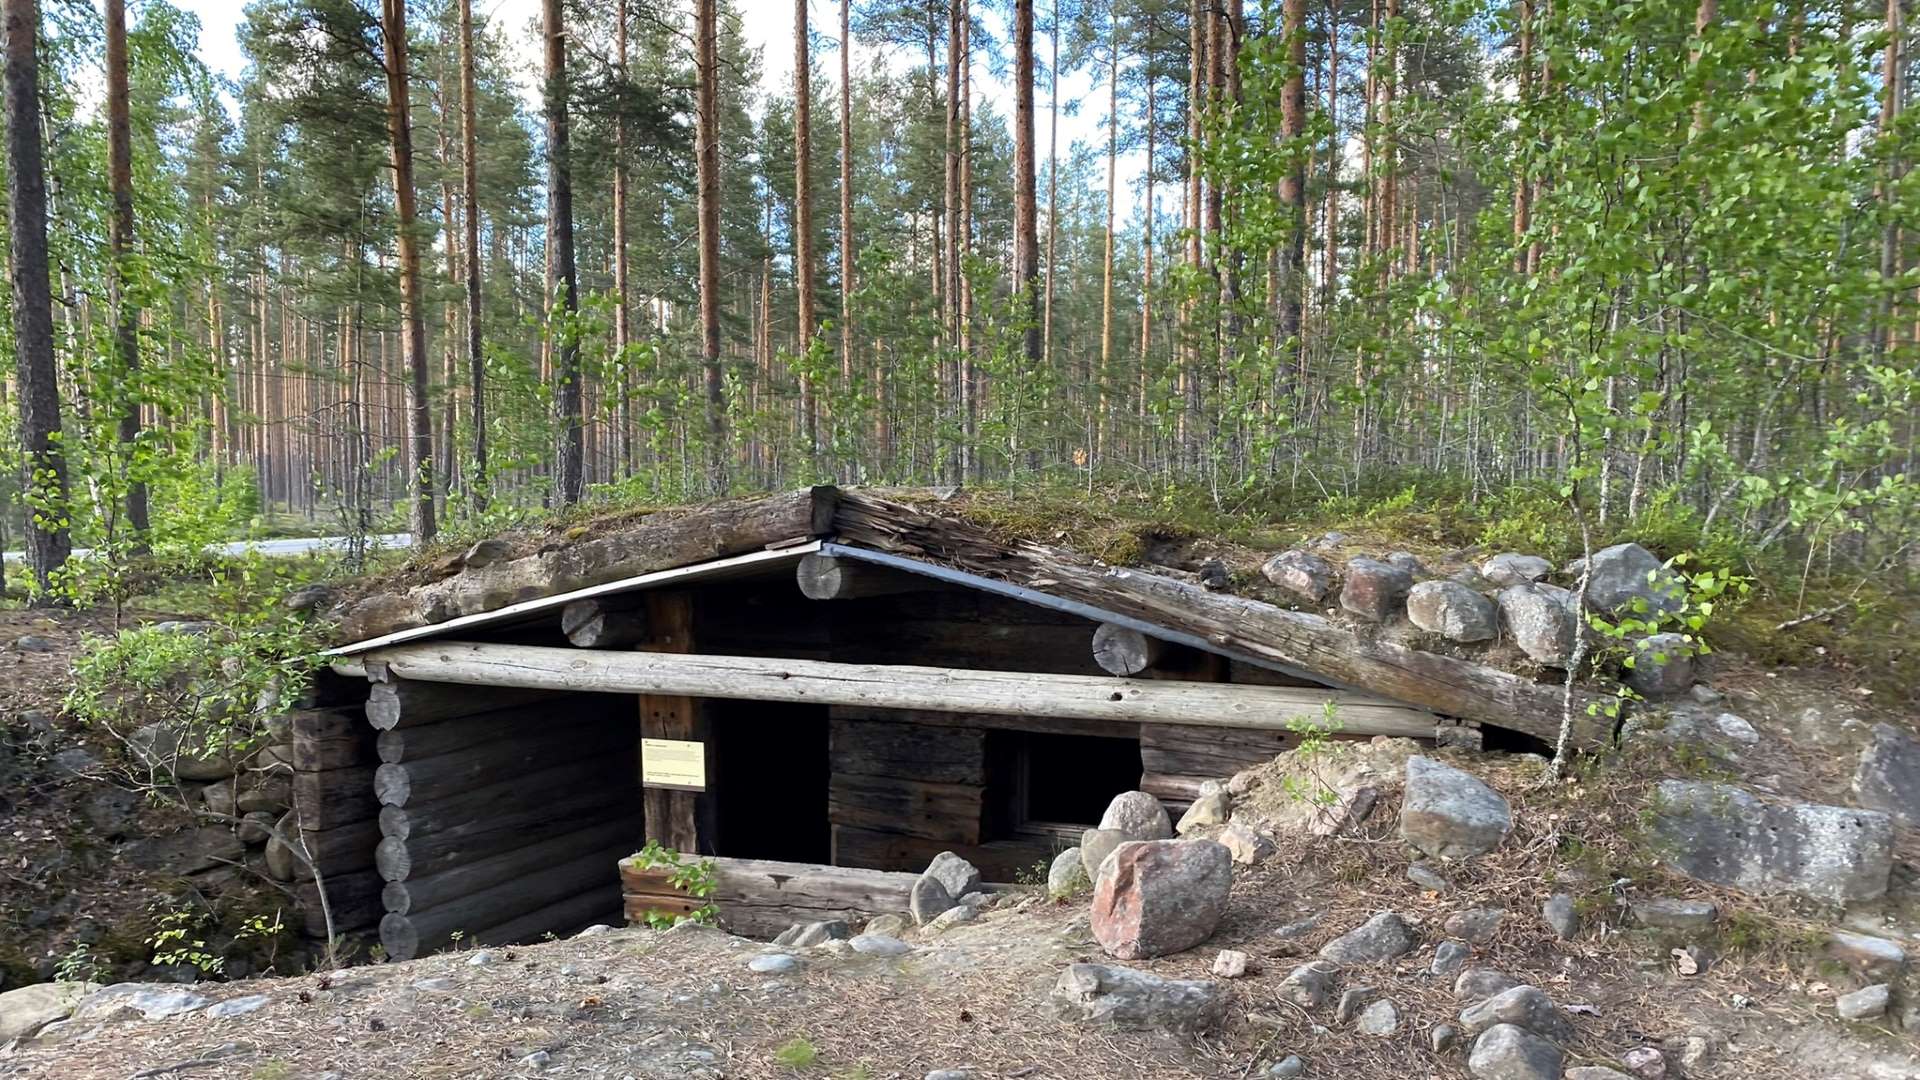 Menkijärvi dugout and defence fighting position in Alajärvi